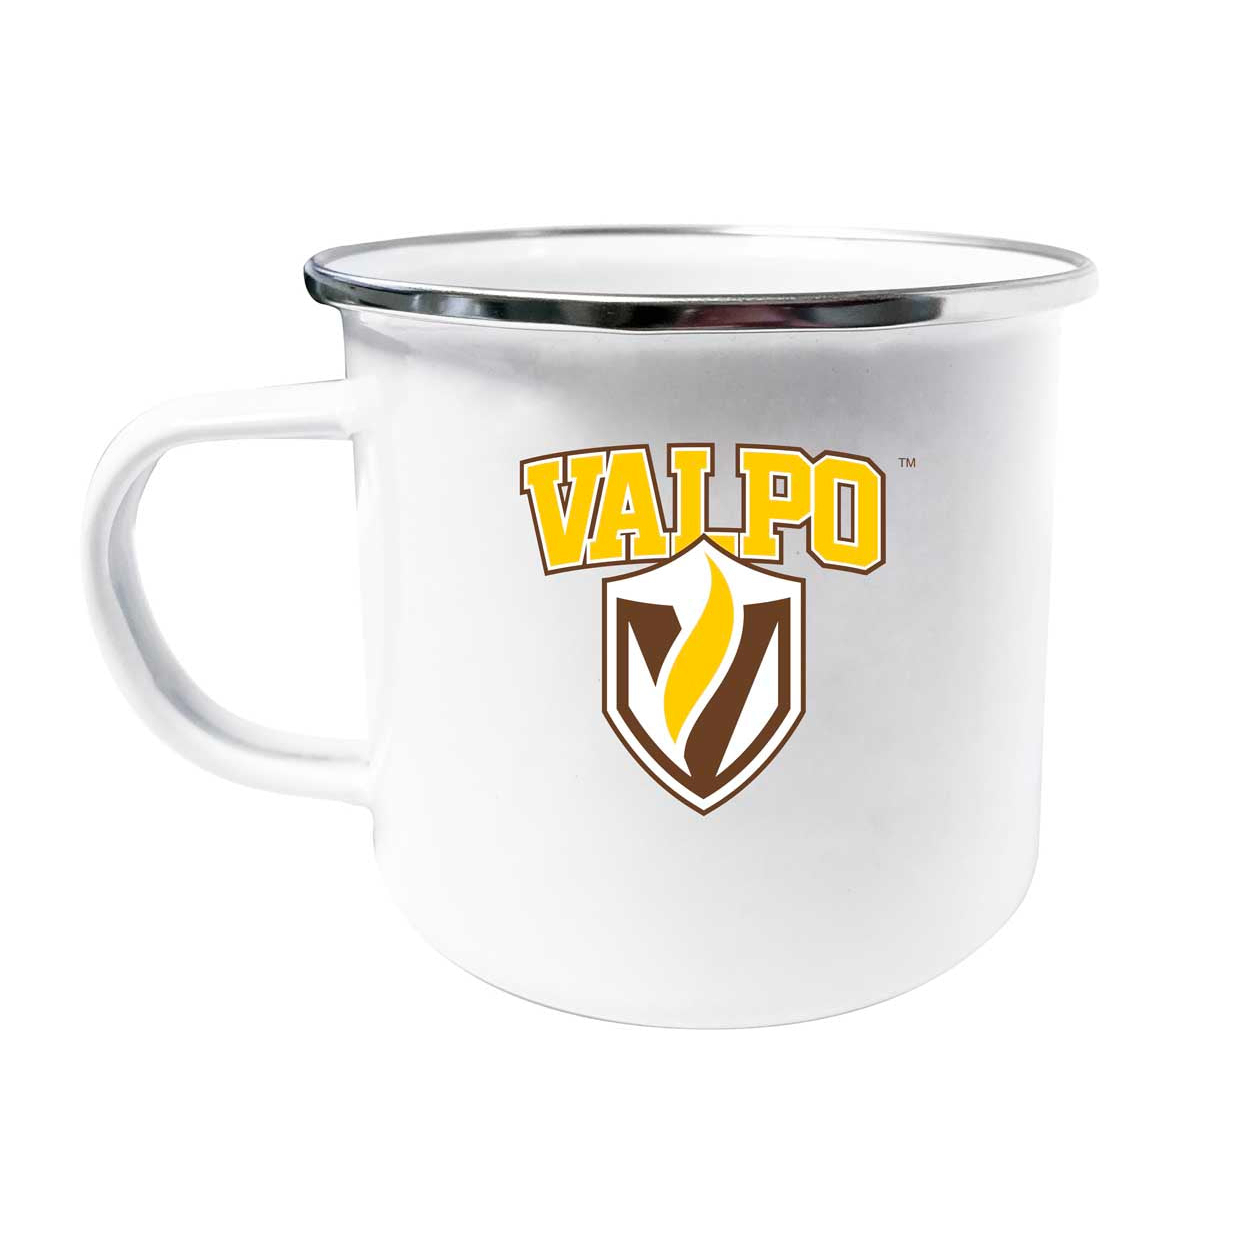 Valparaiso University Tin Camper Coffee Mug - Choose Your Color - White